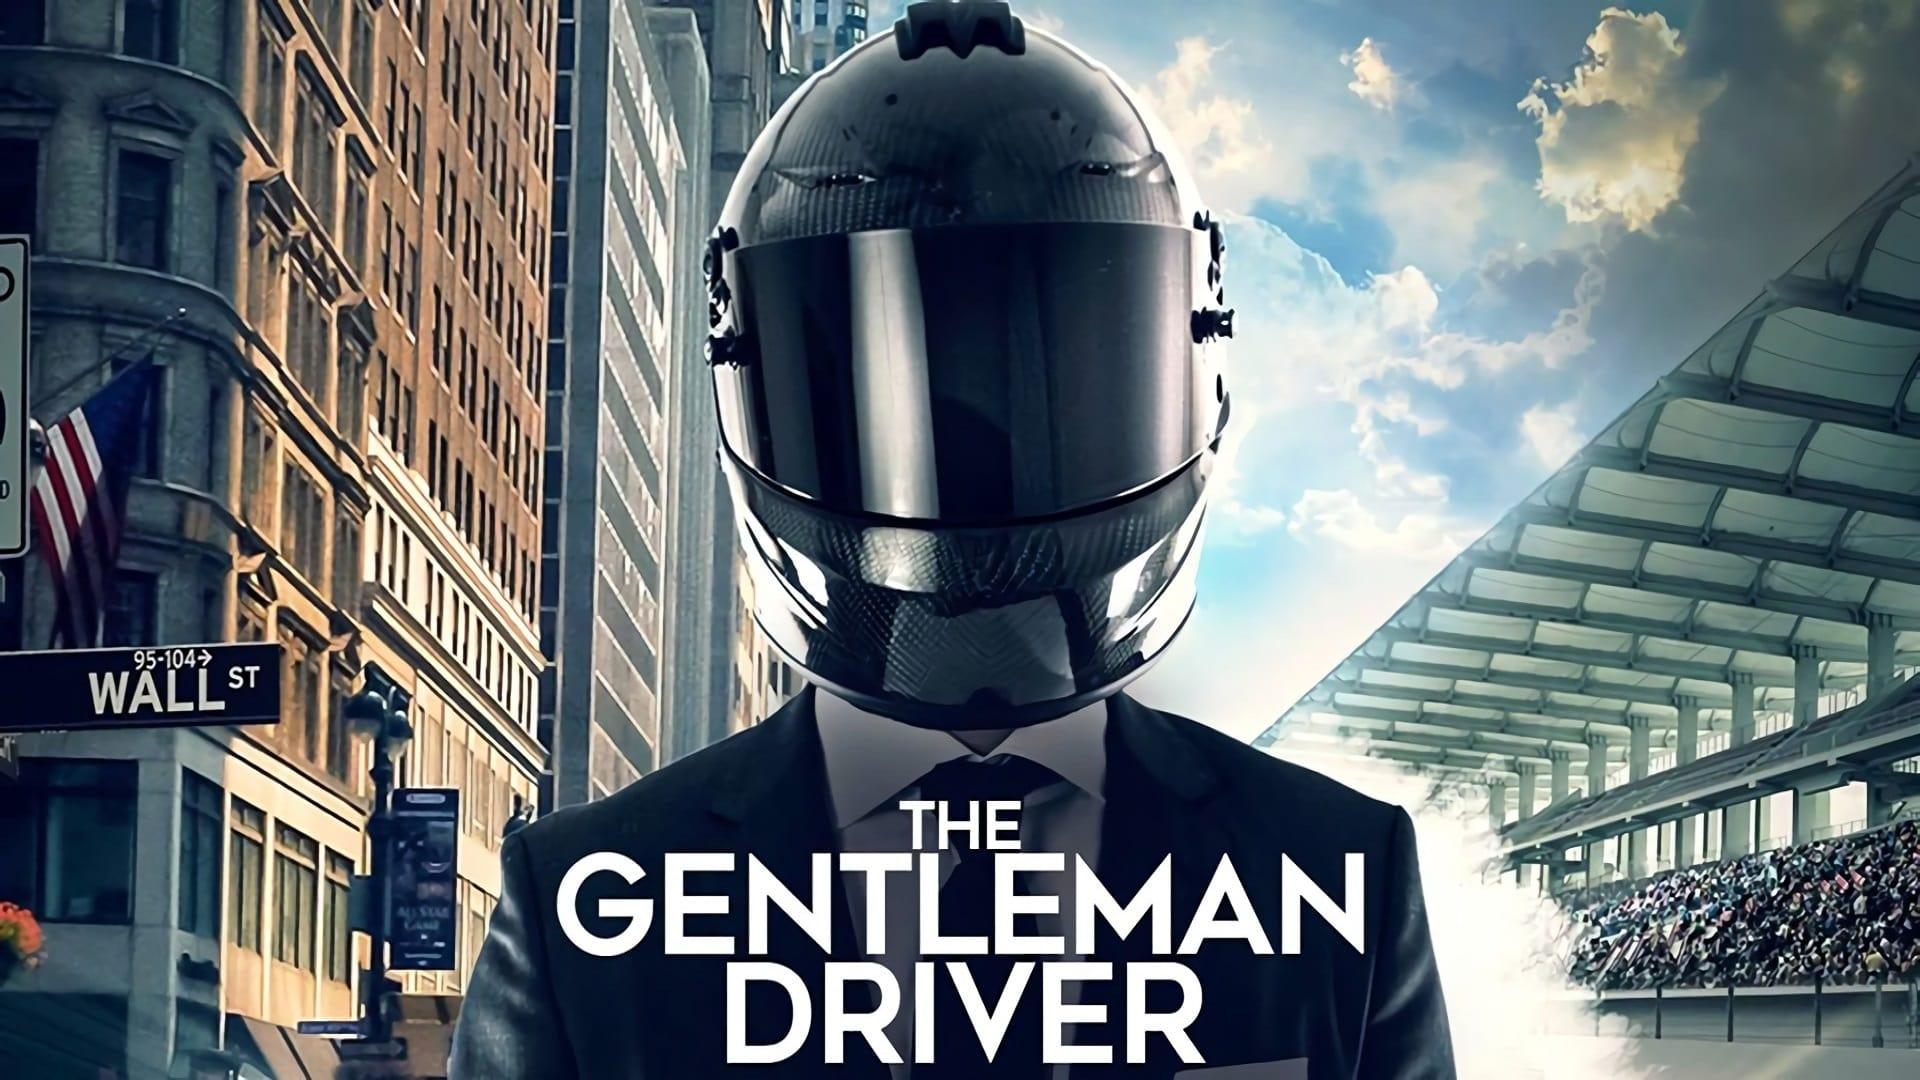 The Gentleman Driver backdrop